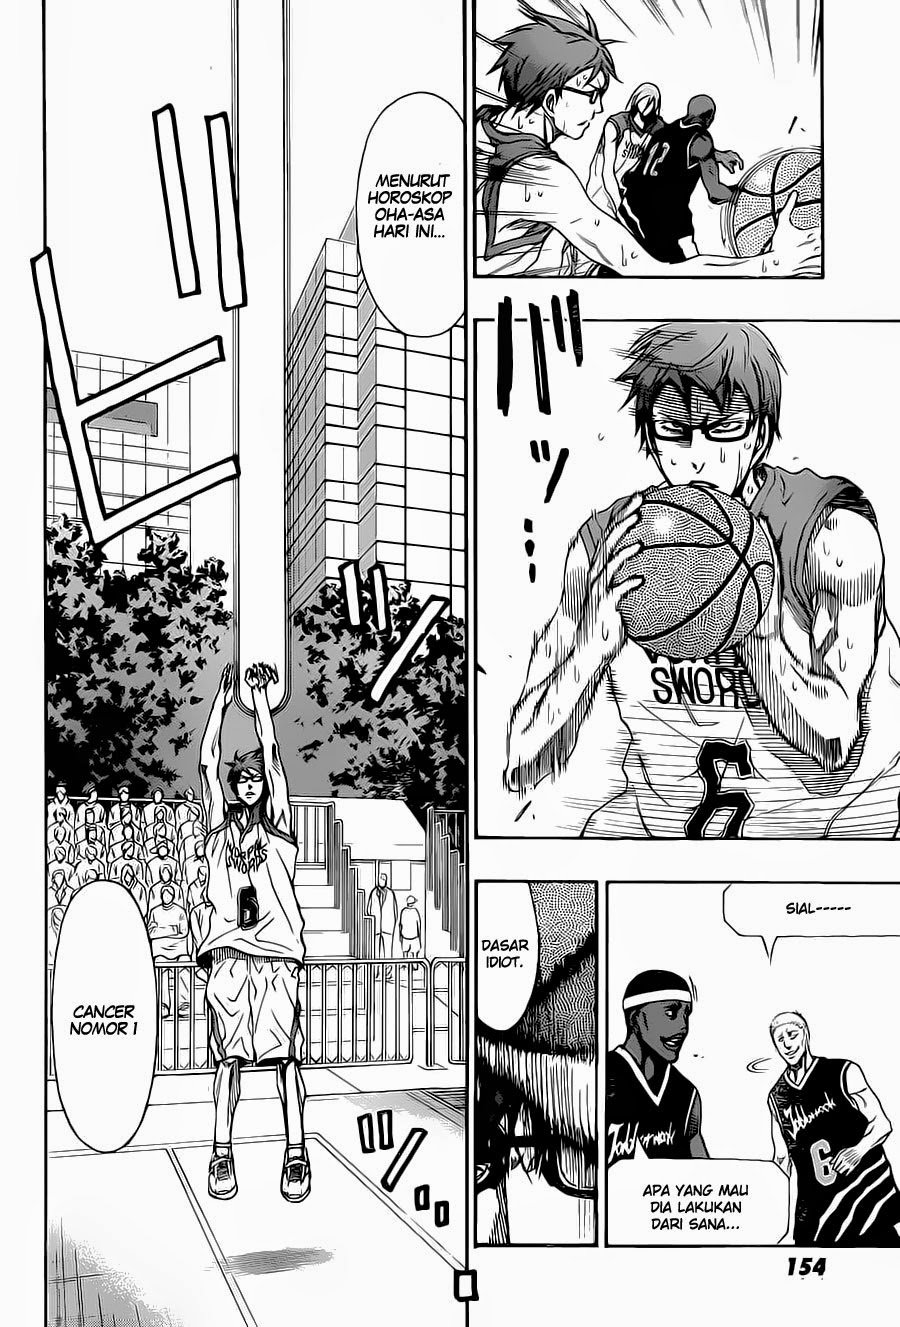 Kuroko no Basket – Extra Game Chapter 03